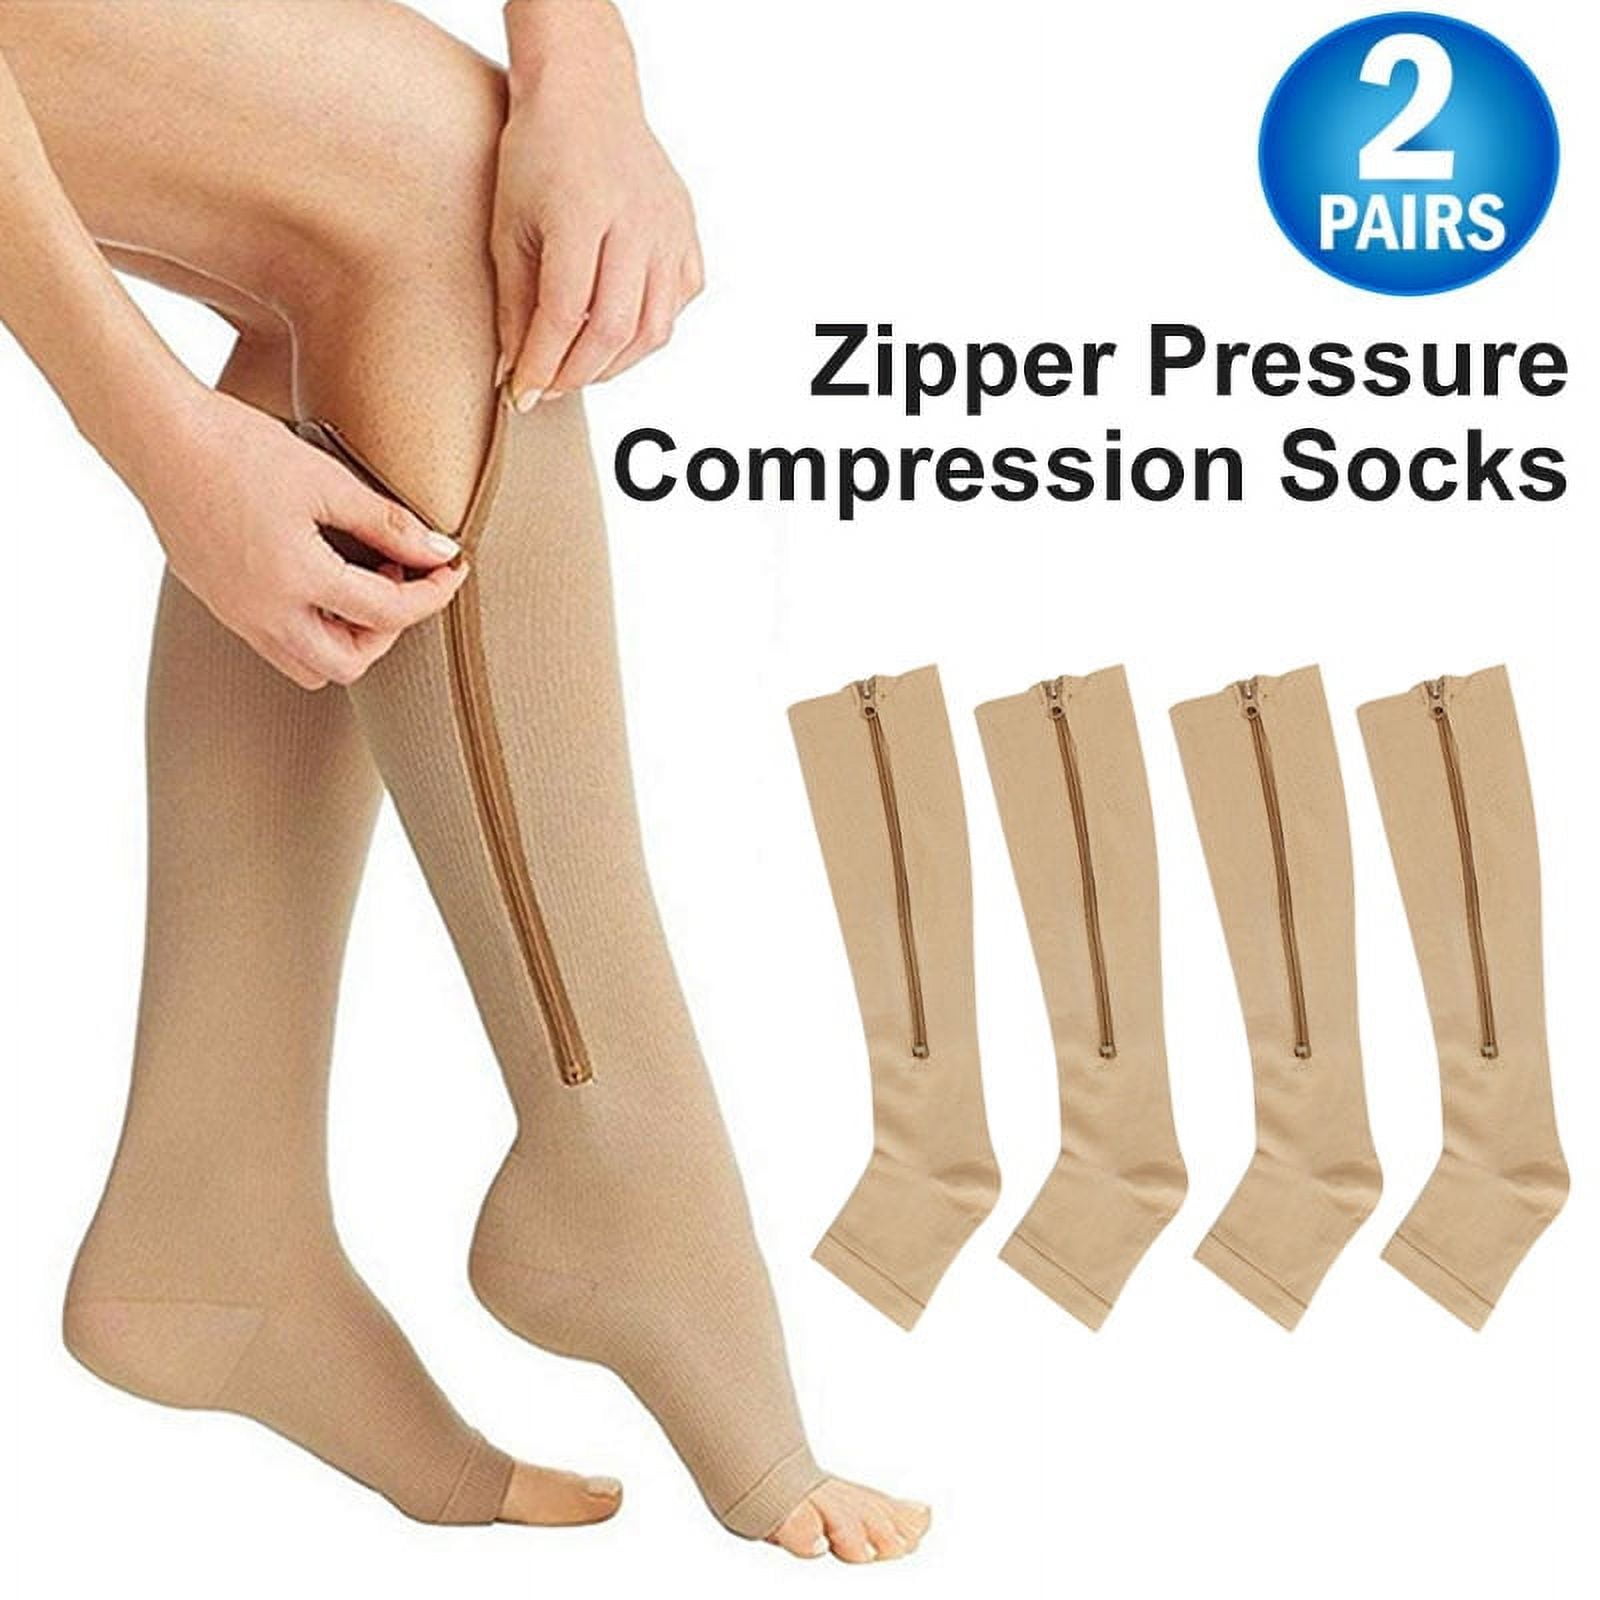 Zipper Pressure Compression Socks Support Stockings Leg - Open Toe Knee  High, Helps Circulation, Varicose Veins, Swollen Legs 